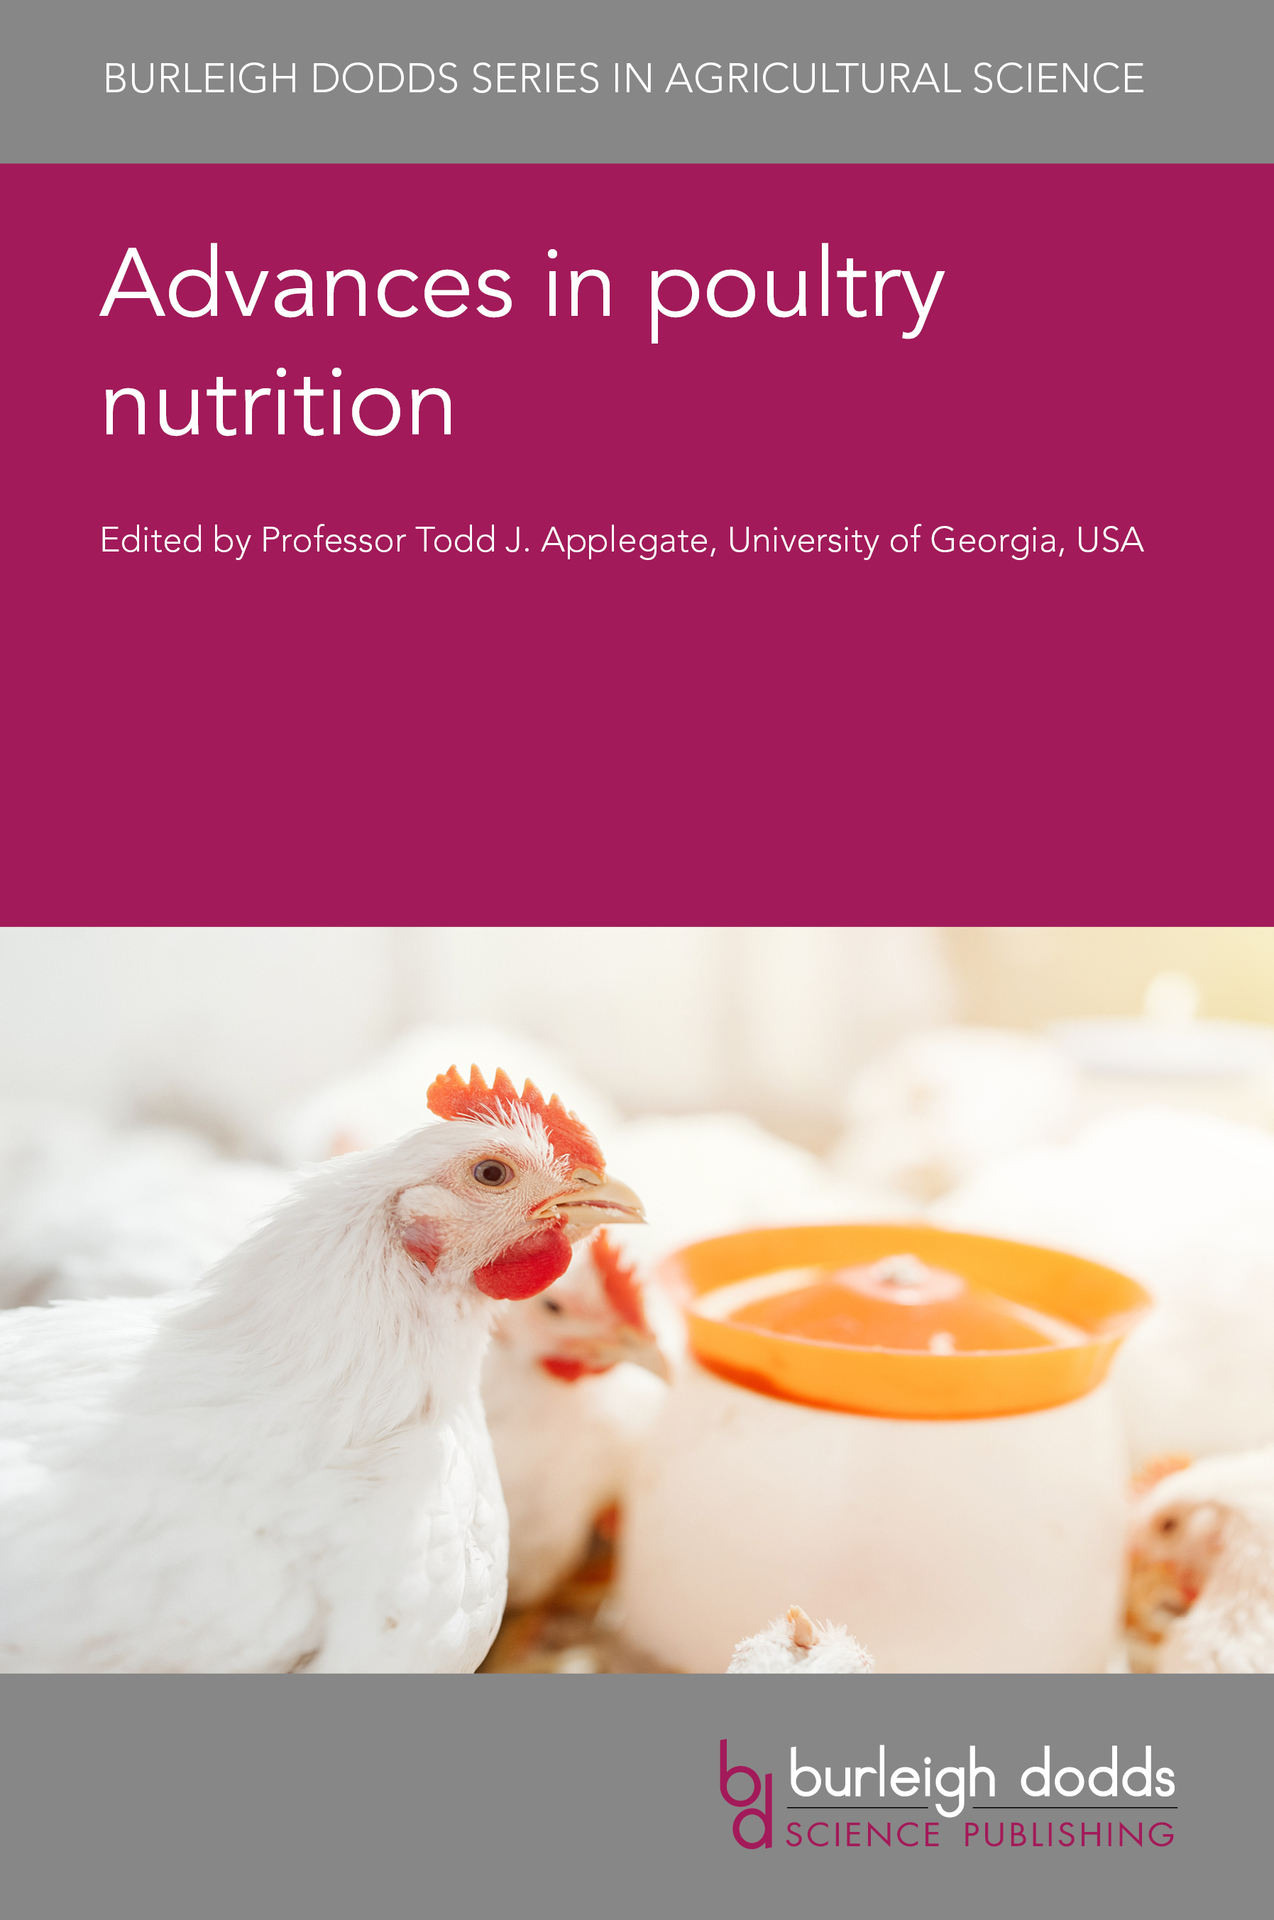 Advances in poultry nutrition